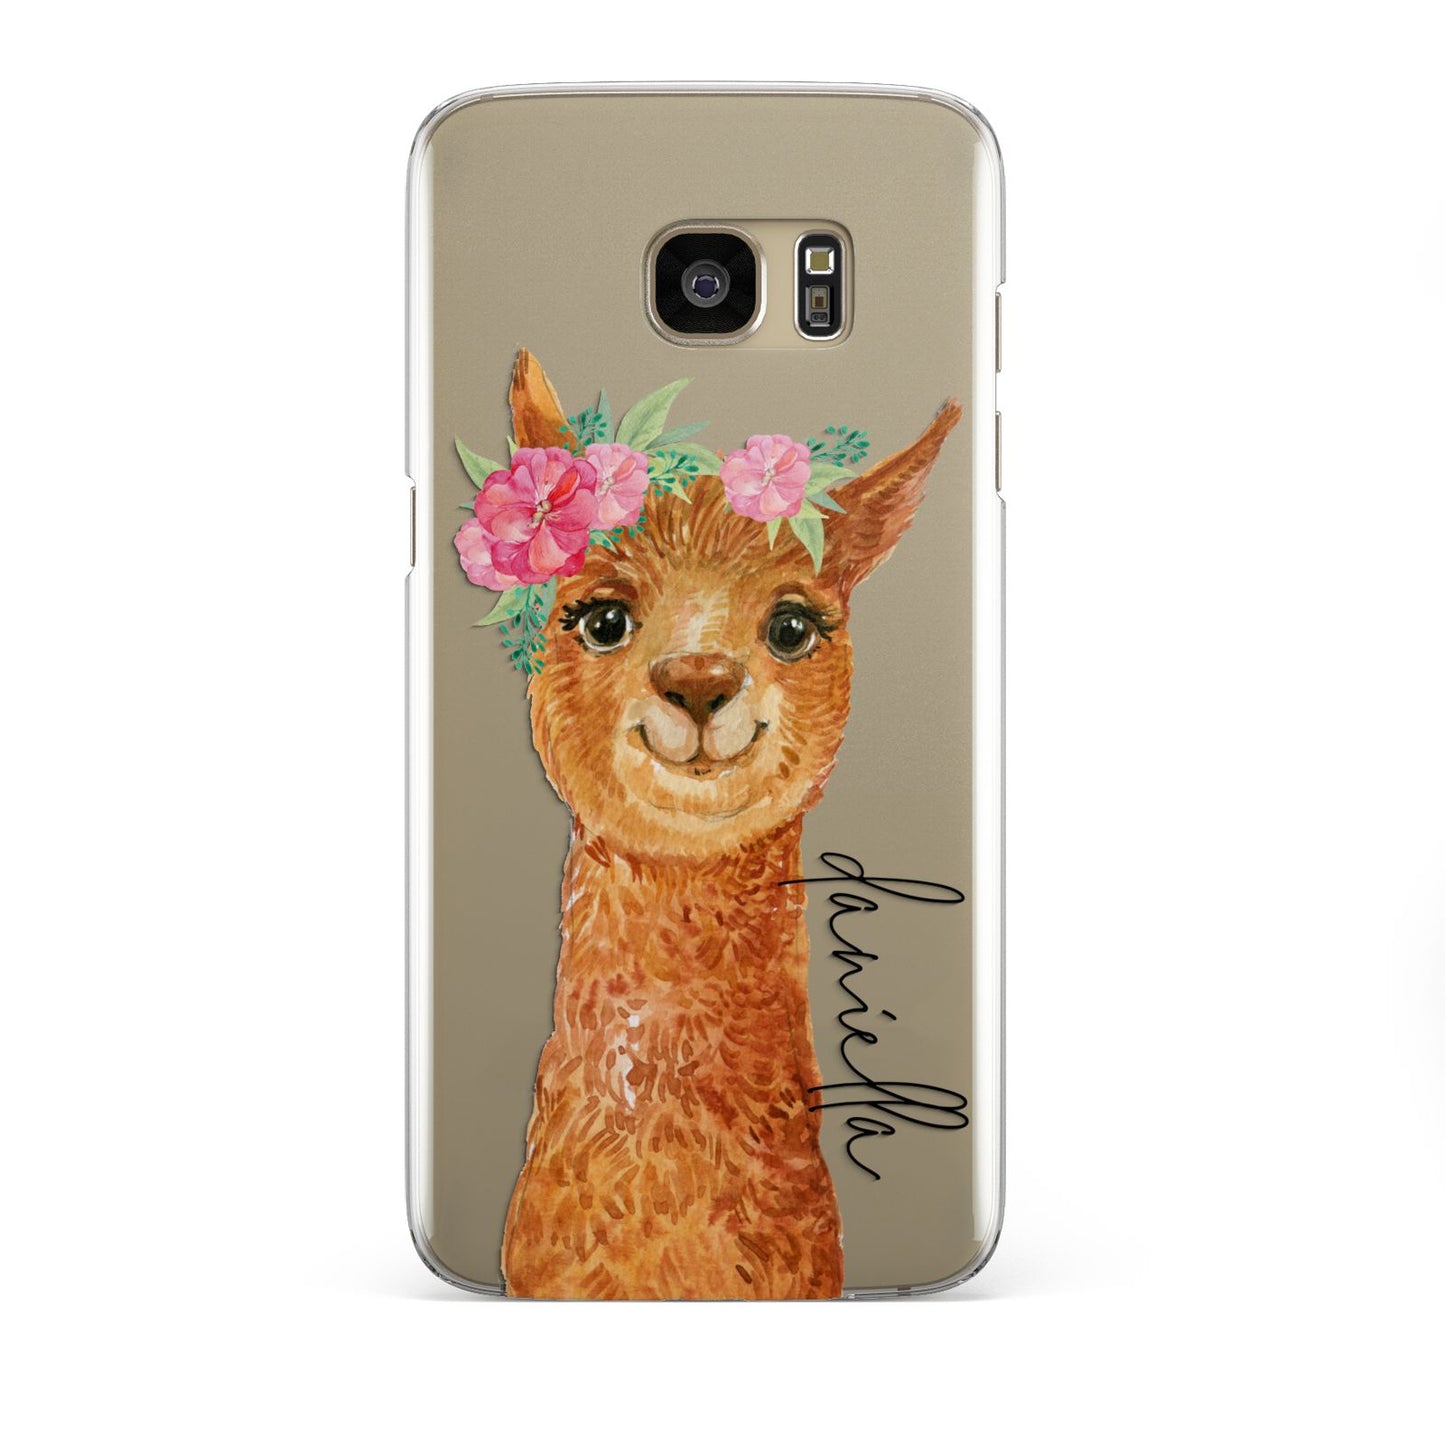 Personalised Llama Samsung Galaxy S7 Edge Case